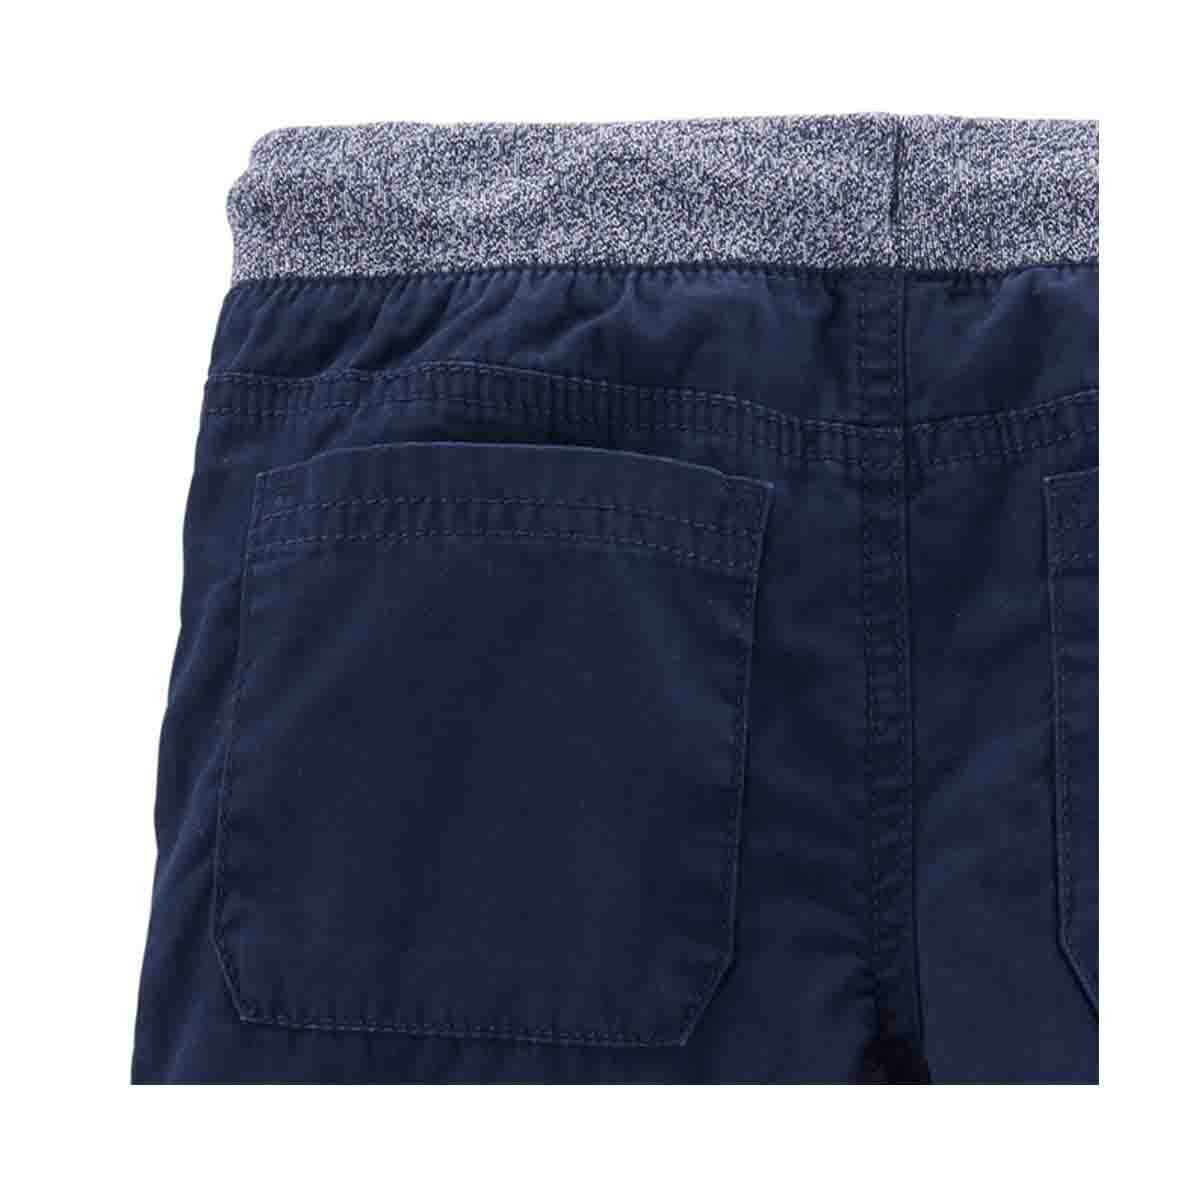 Pantalon Color Azul Marino Carters